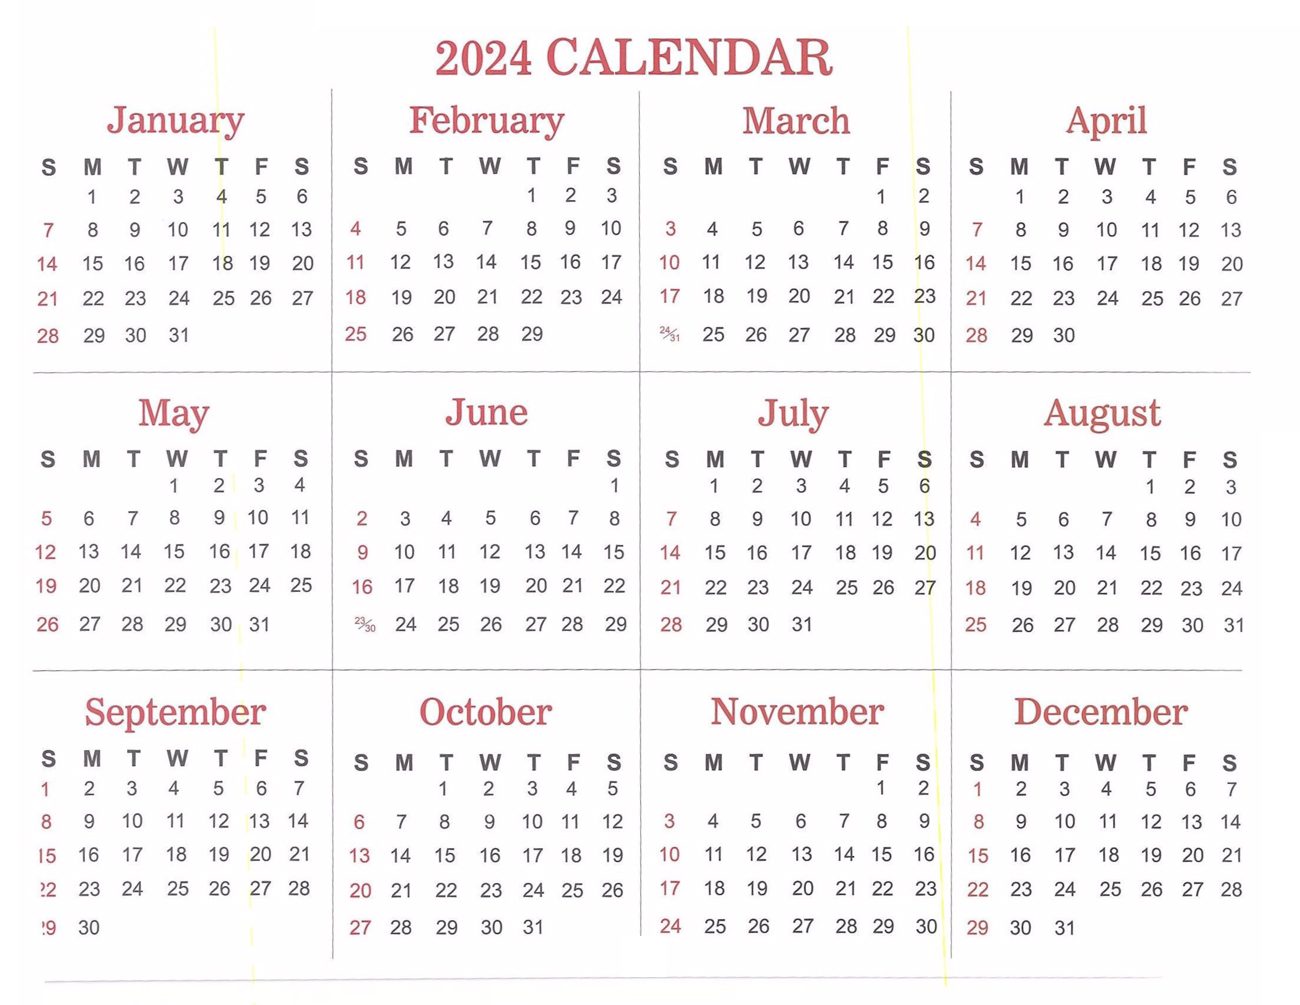 Back Cover: 2023 The Peoples Gospel Hour Calendar